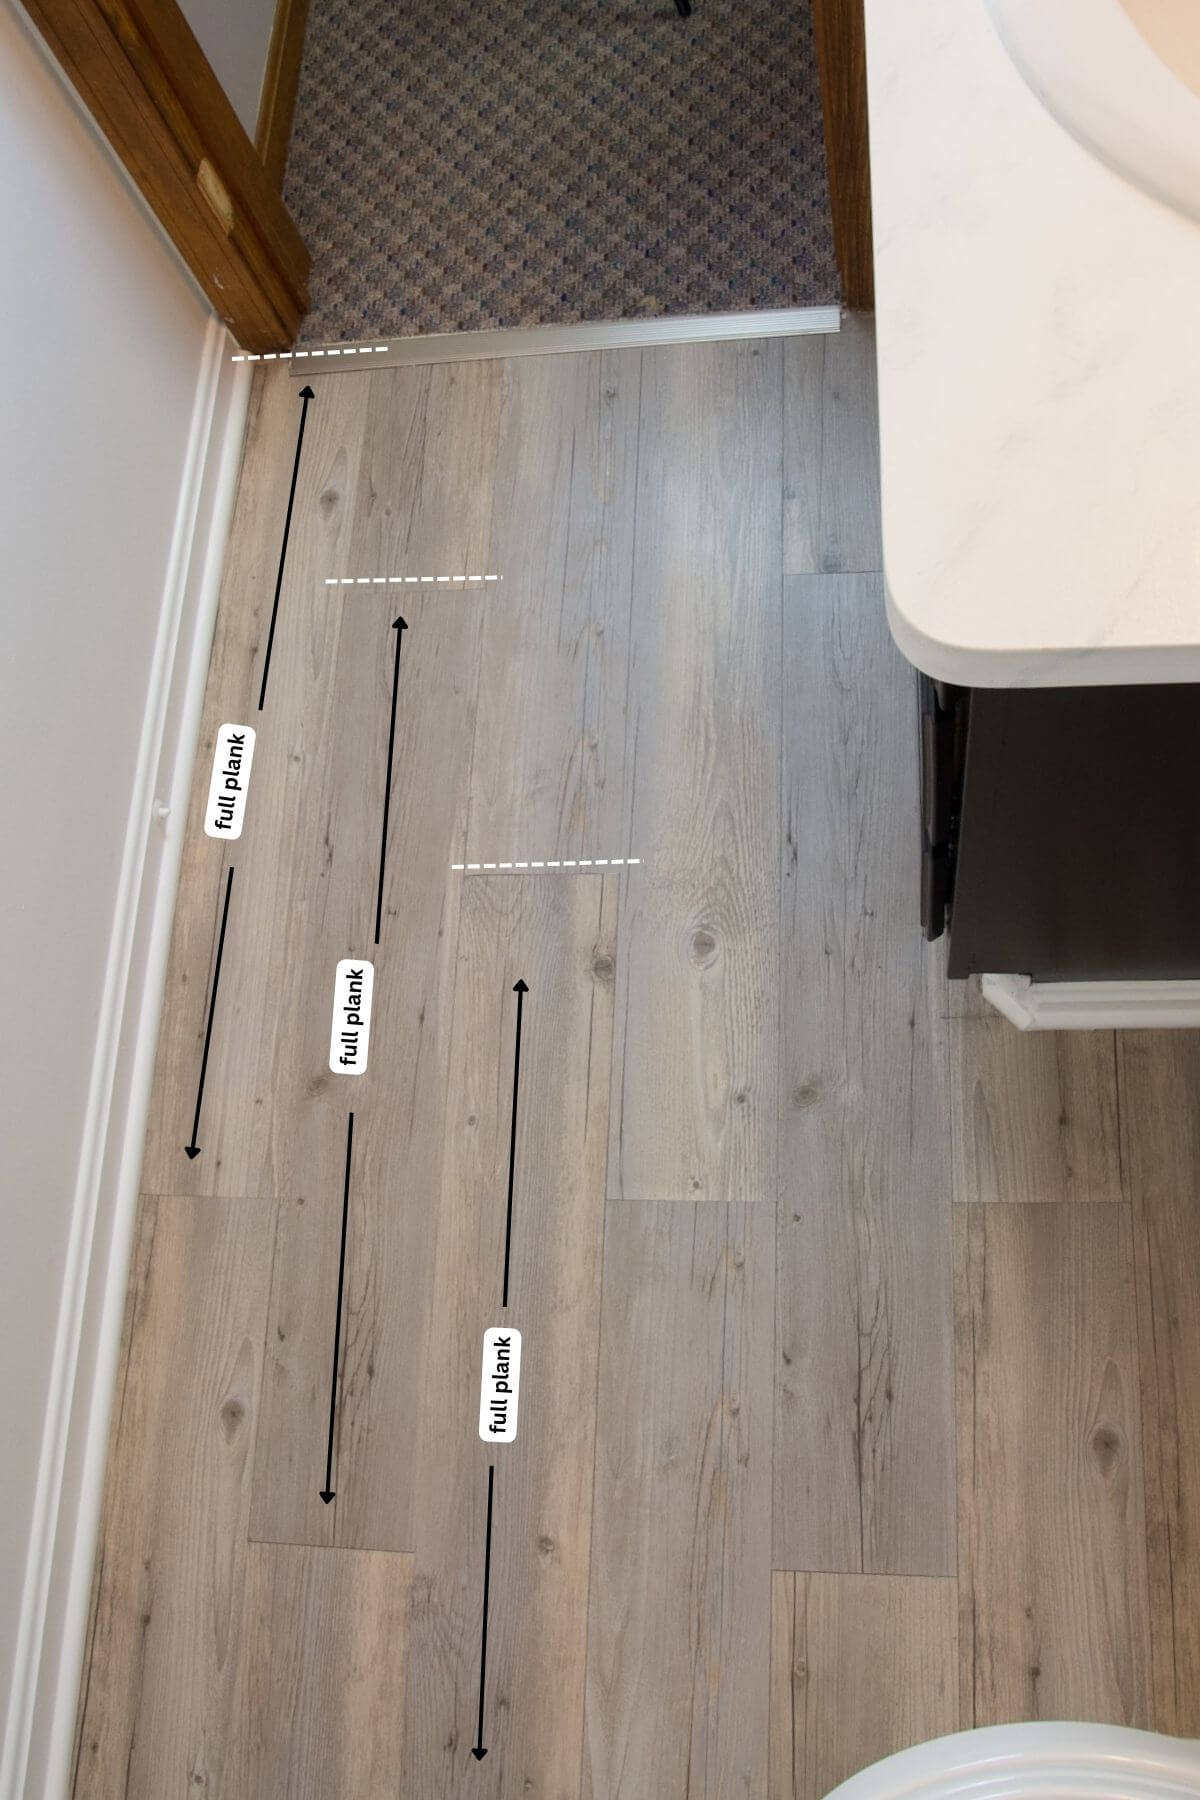 lines showing peel and stick wood tiles on bathroom floor.